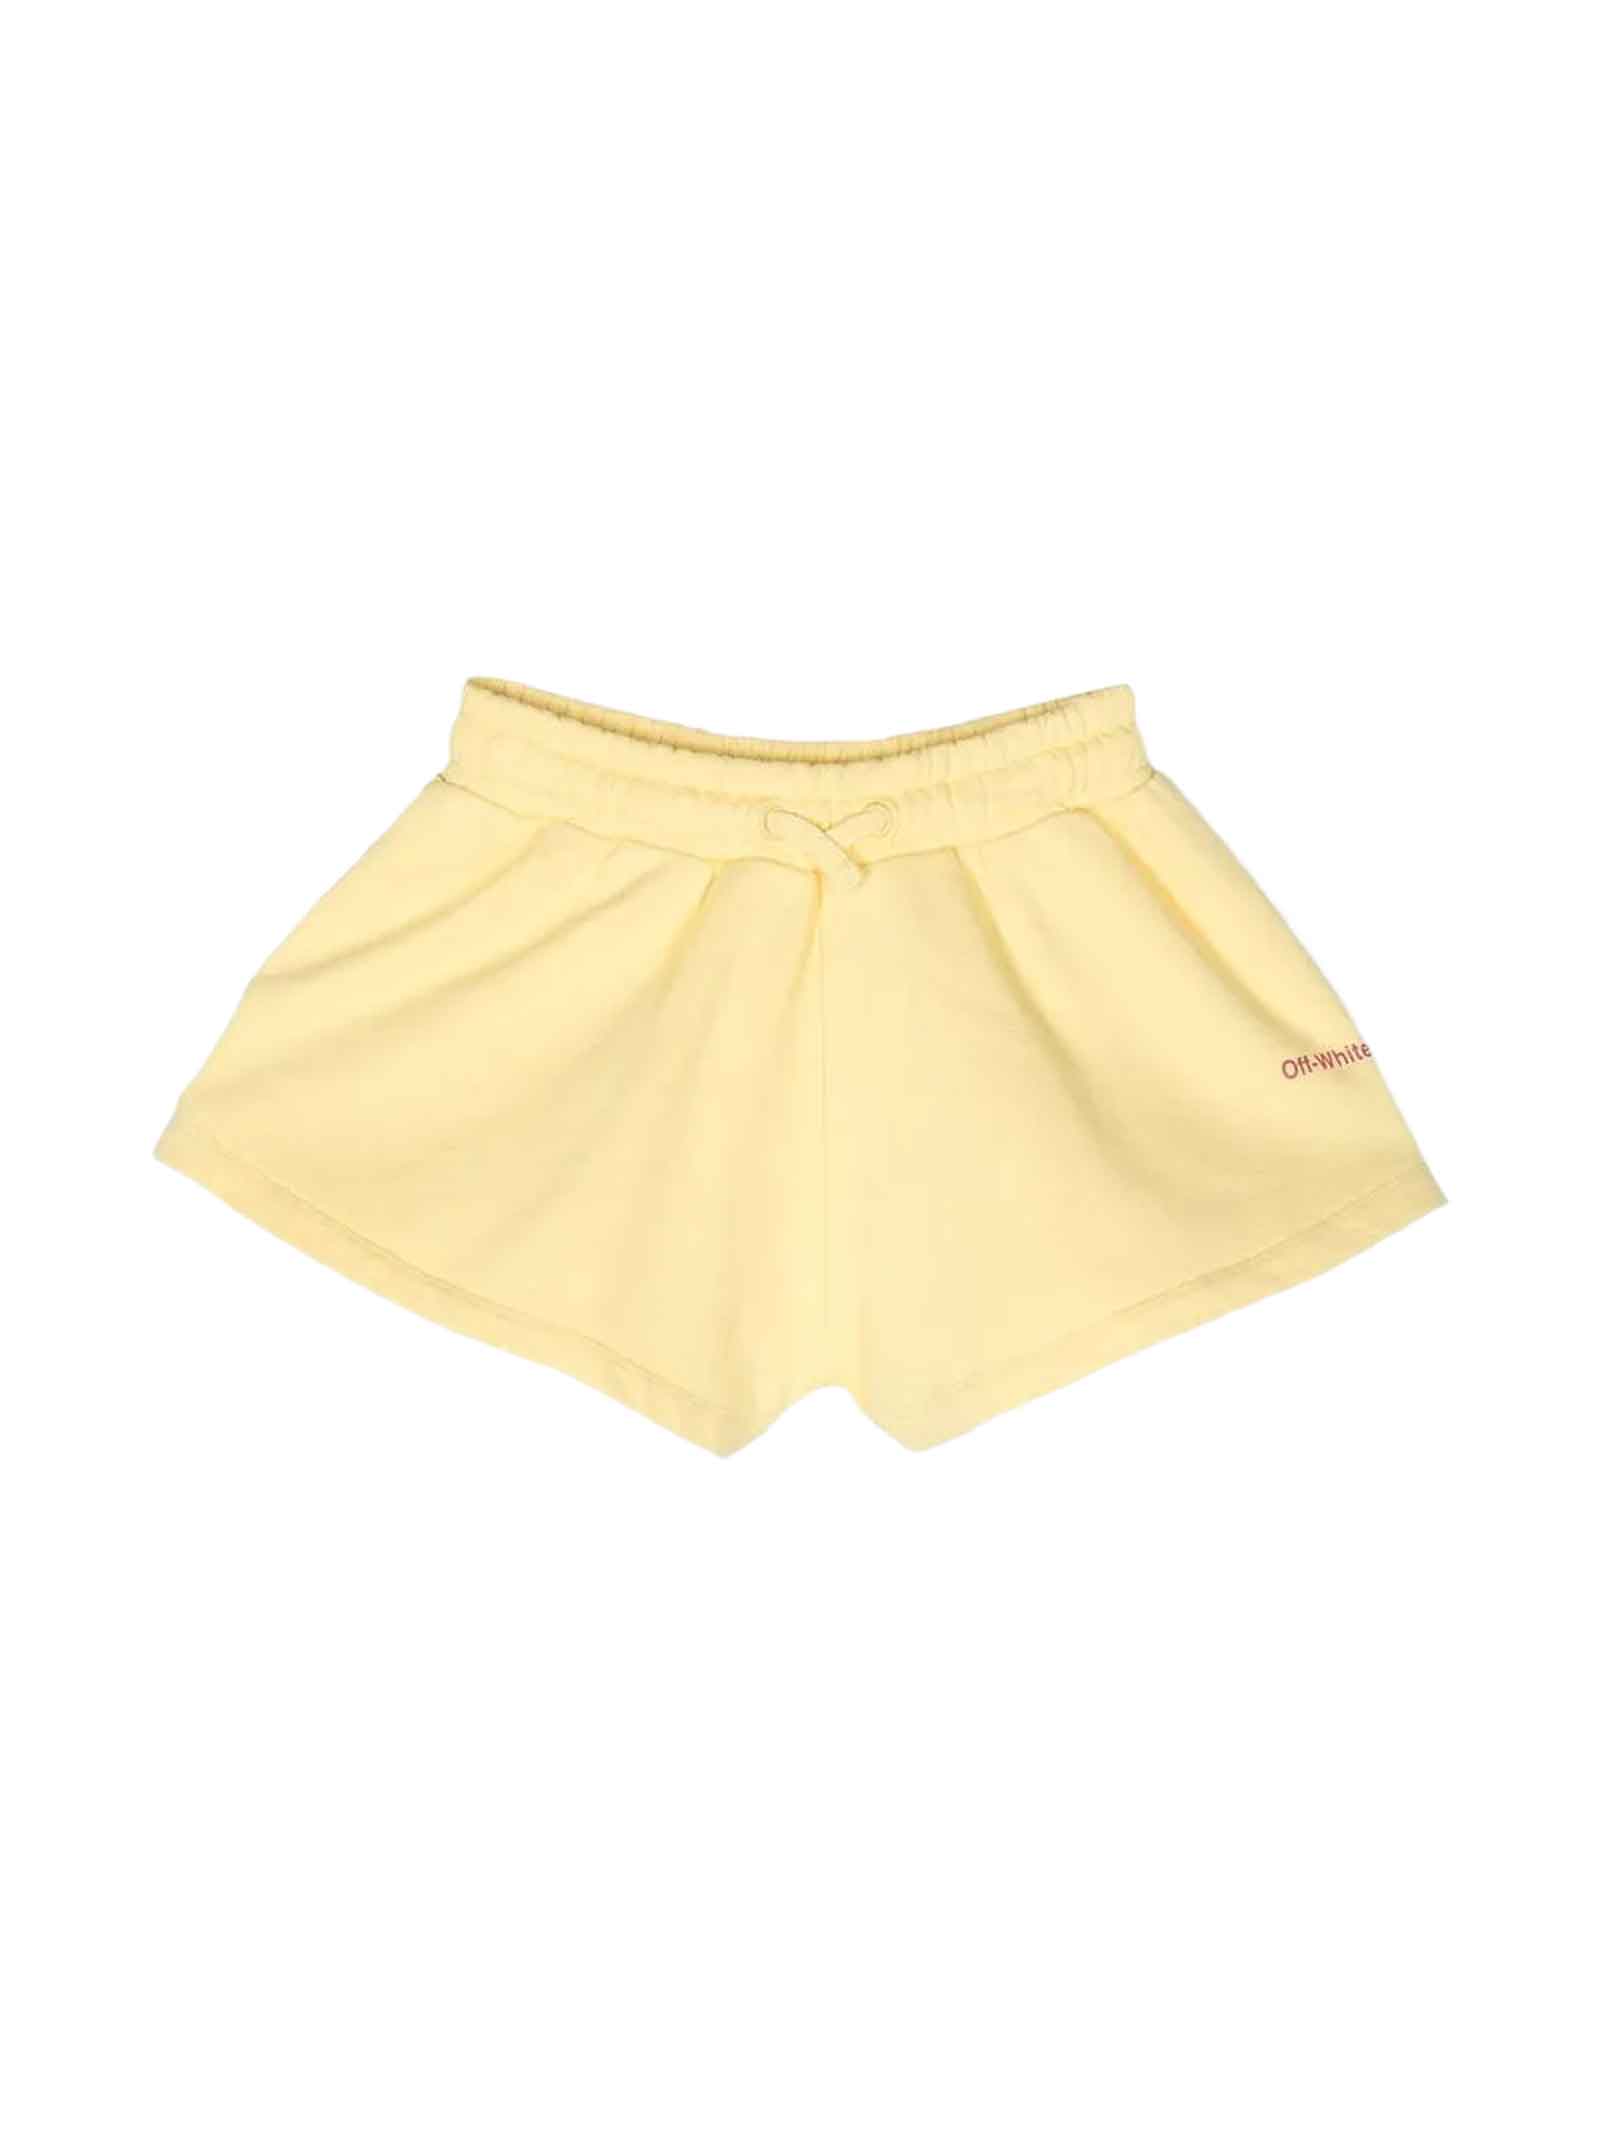 Off-White Yellow Shorts Girl